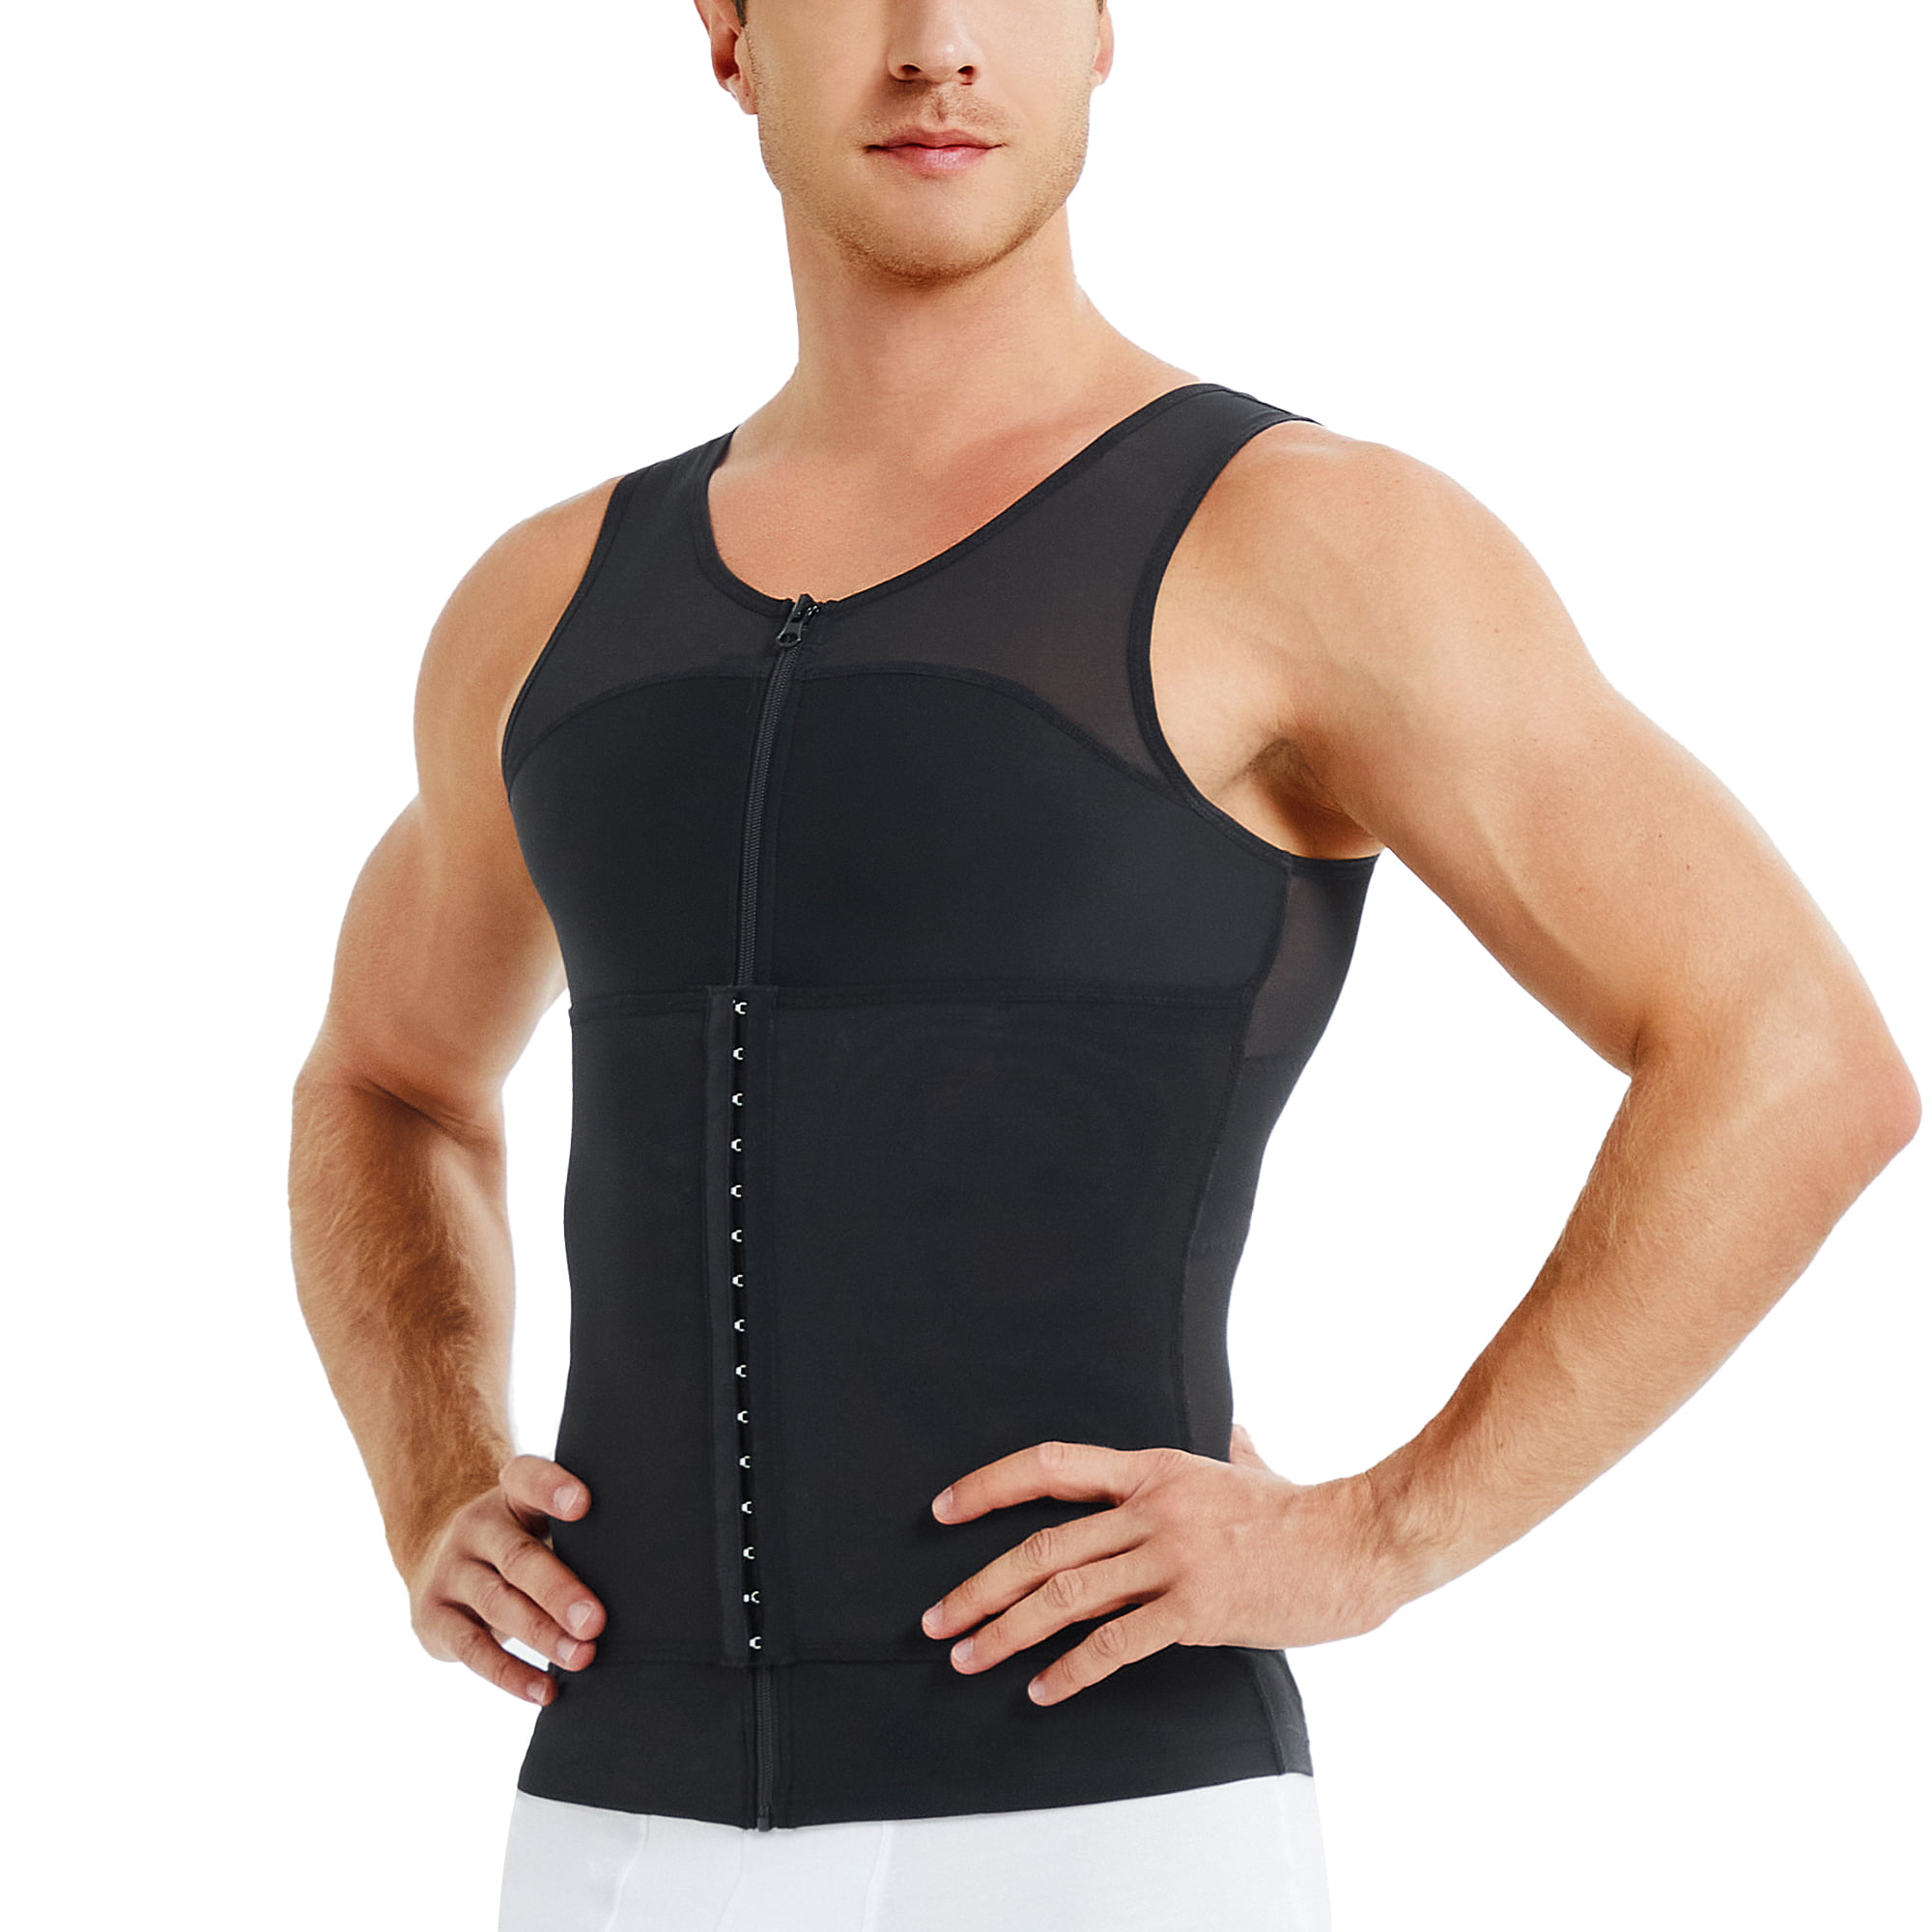 Gotoly Men Tummy Control Shapewear Tank Top Body Shaper Compression Shirts( Black Large) 